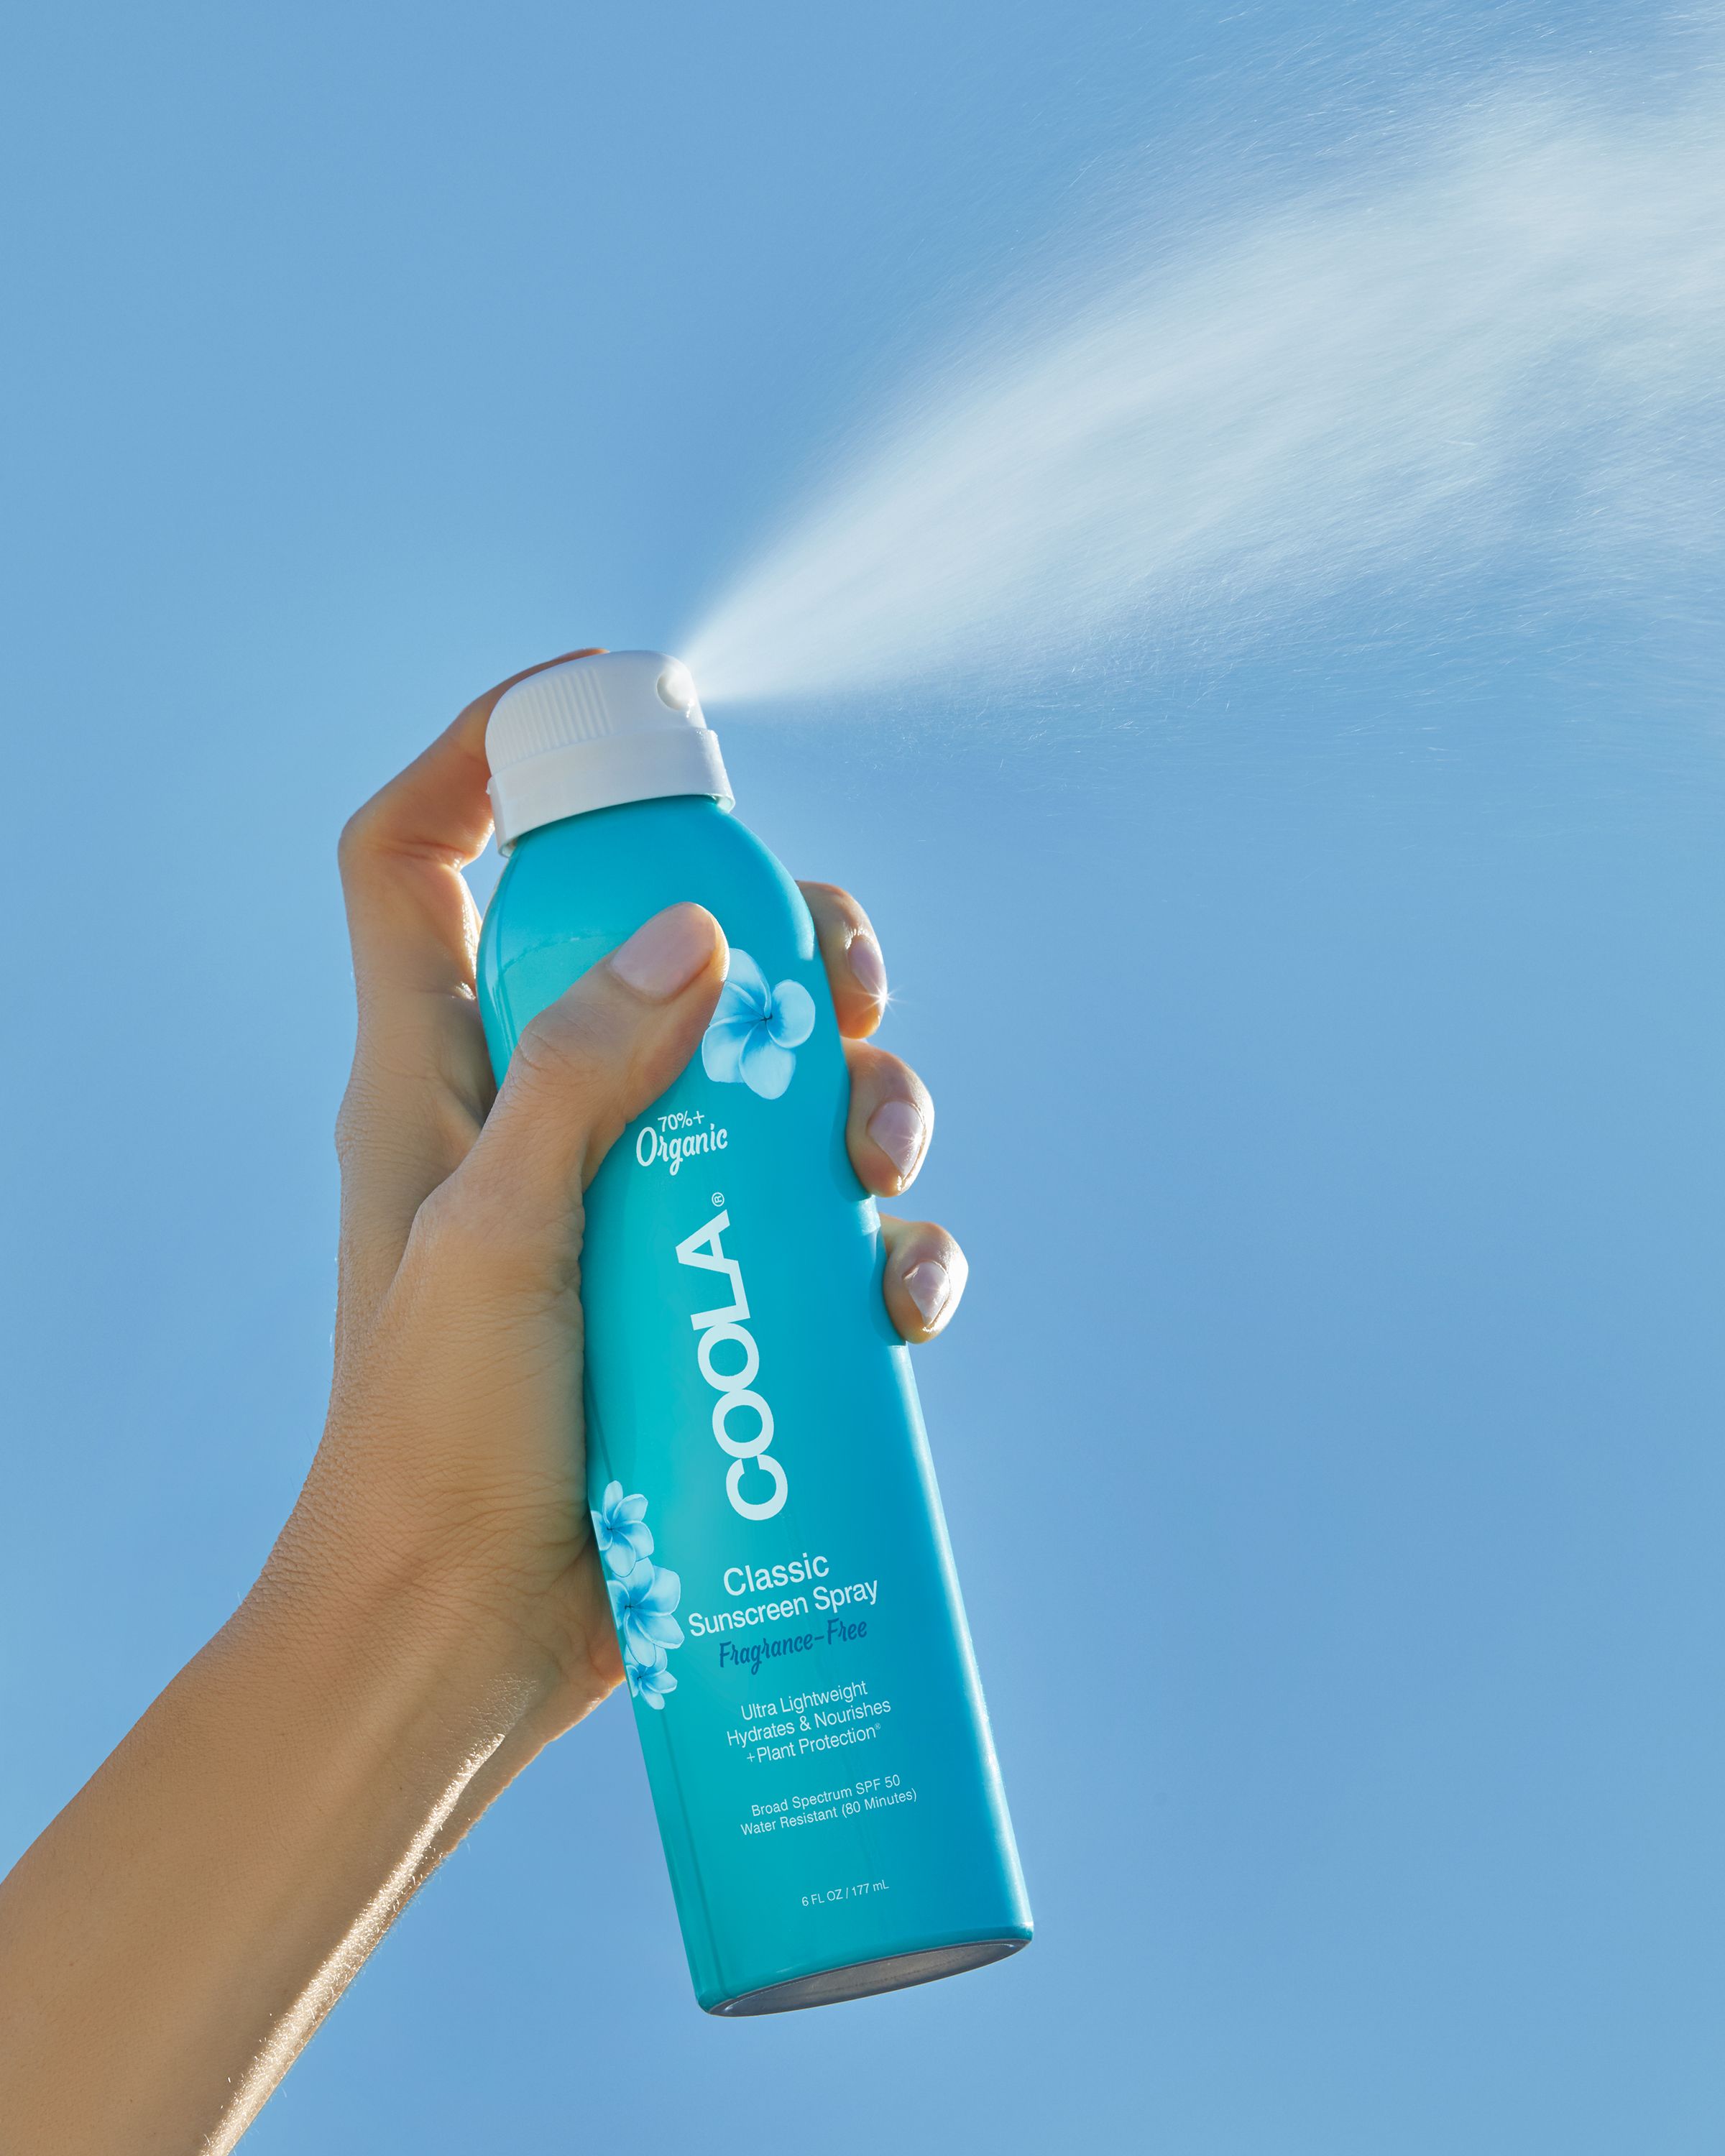 COOLA Classic Body Organic Sunscreen Spray, Fragrance Free, SPF 50 - 6 fl oz